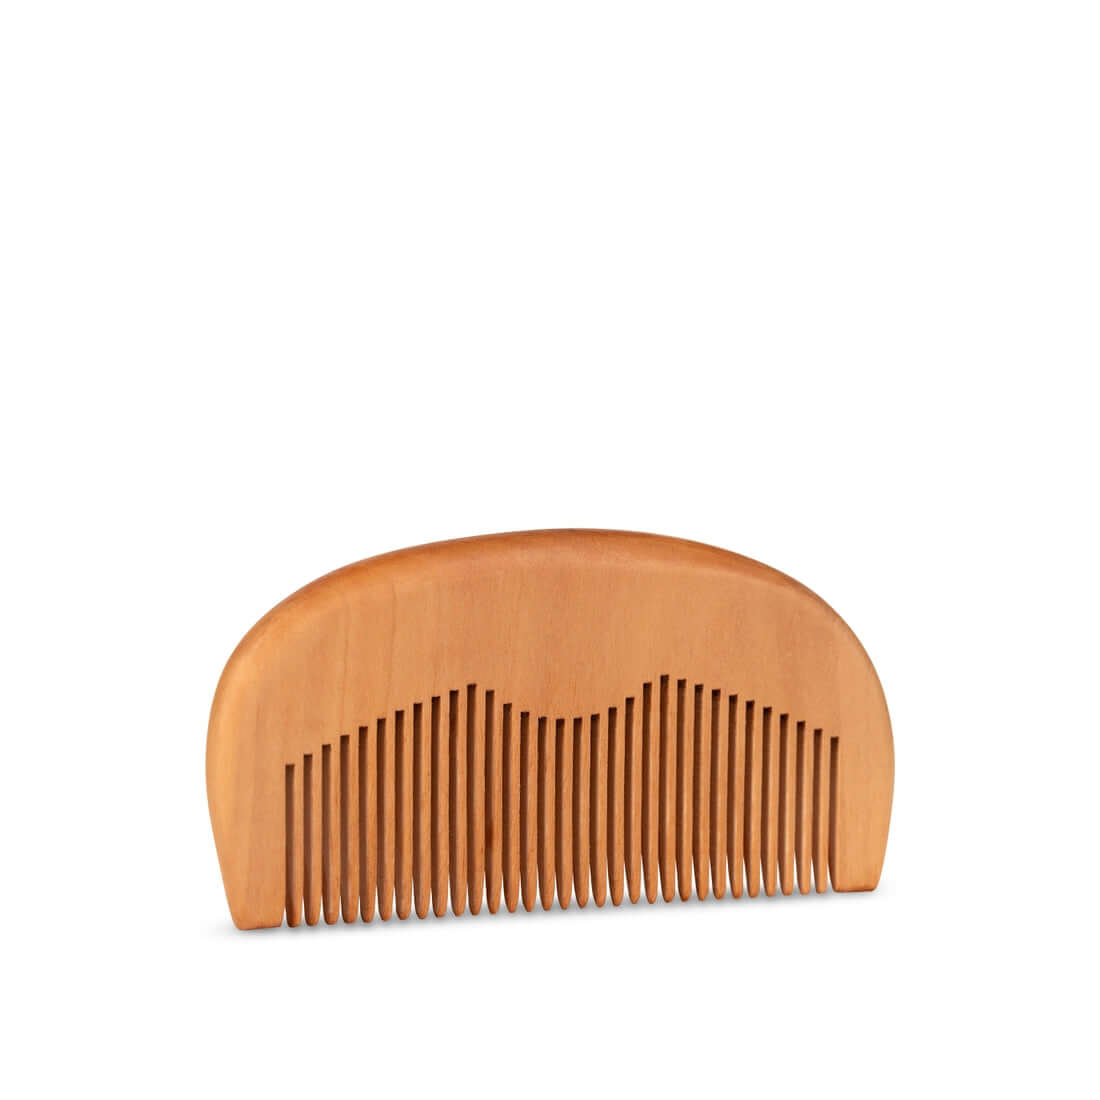 Crux Supply Co. Wooden Beard Comb